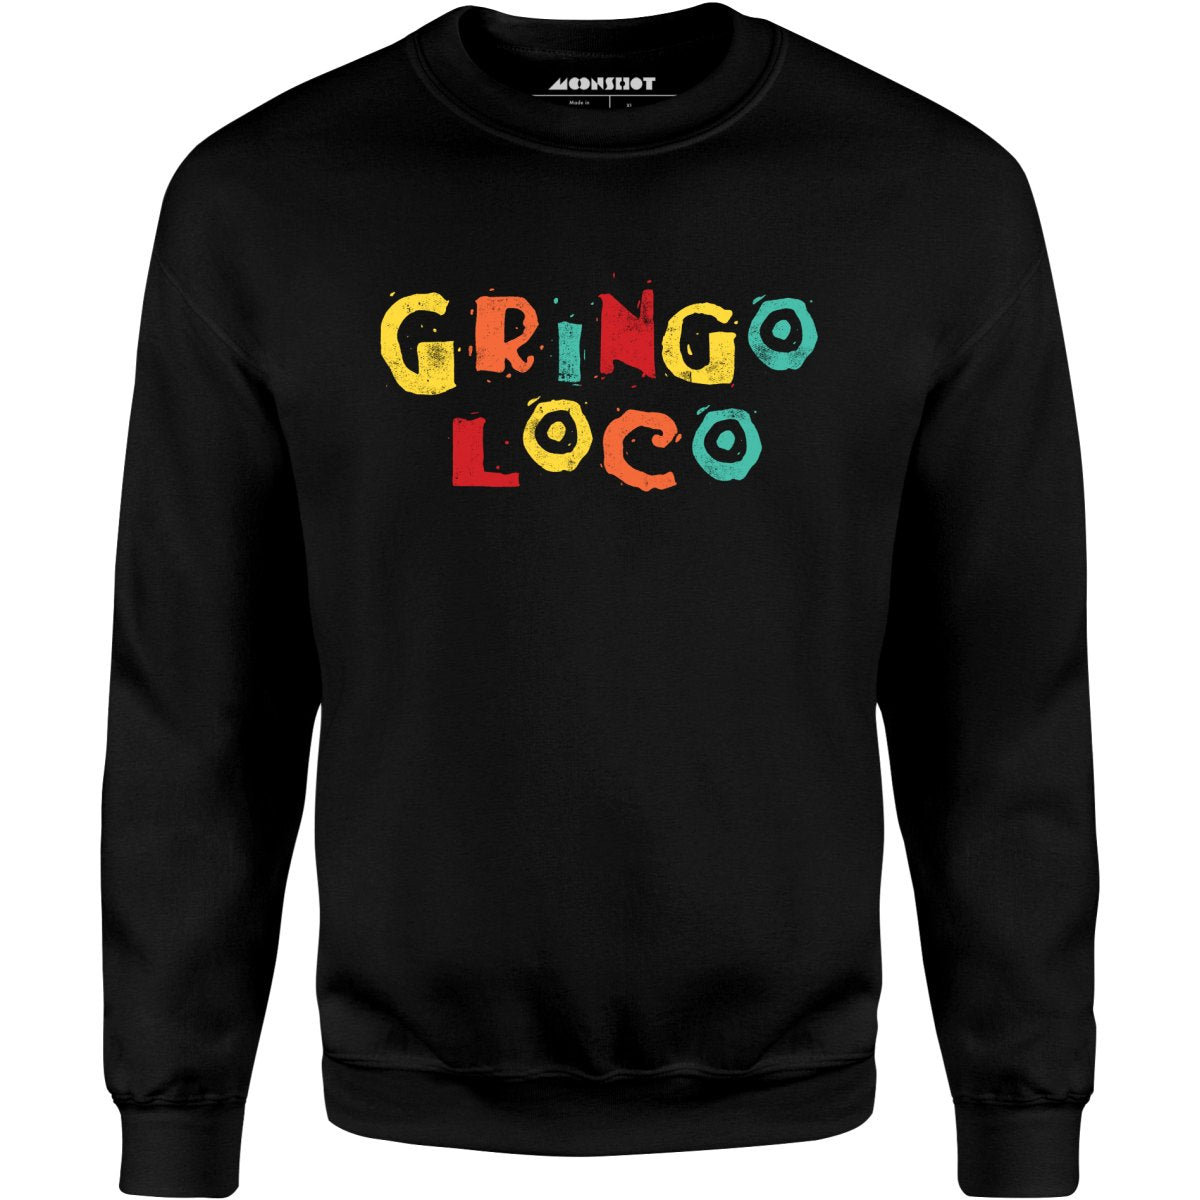 Gringo Loco - Unisex Sweatshirt